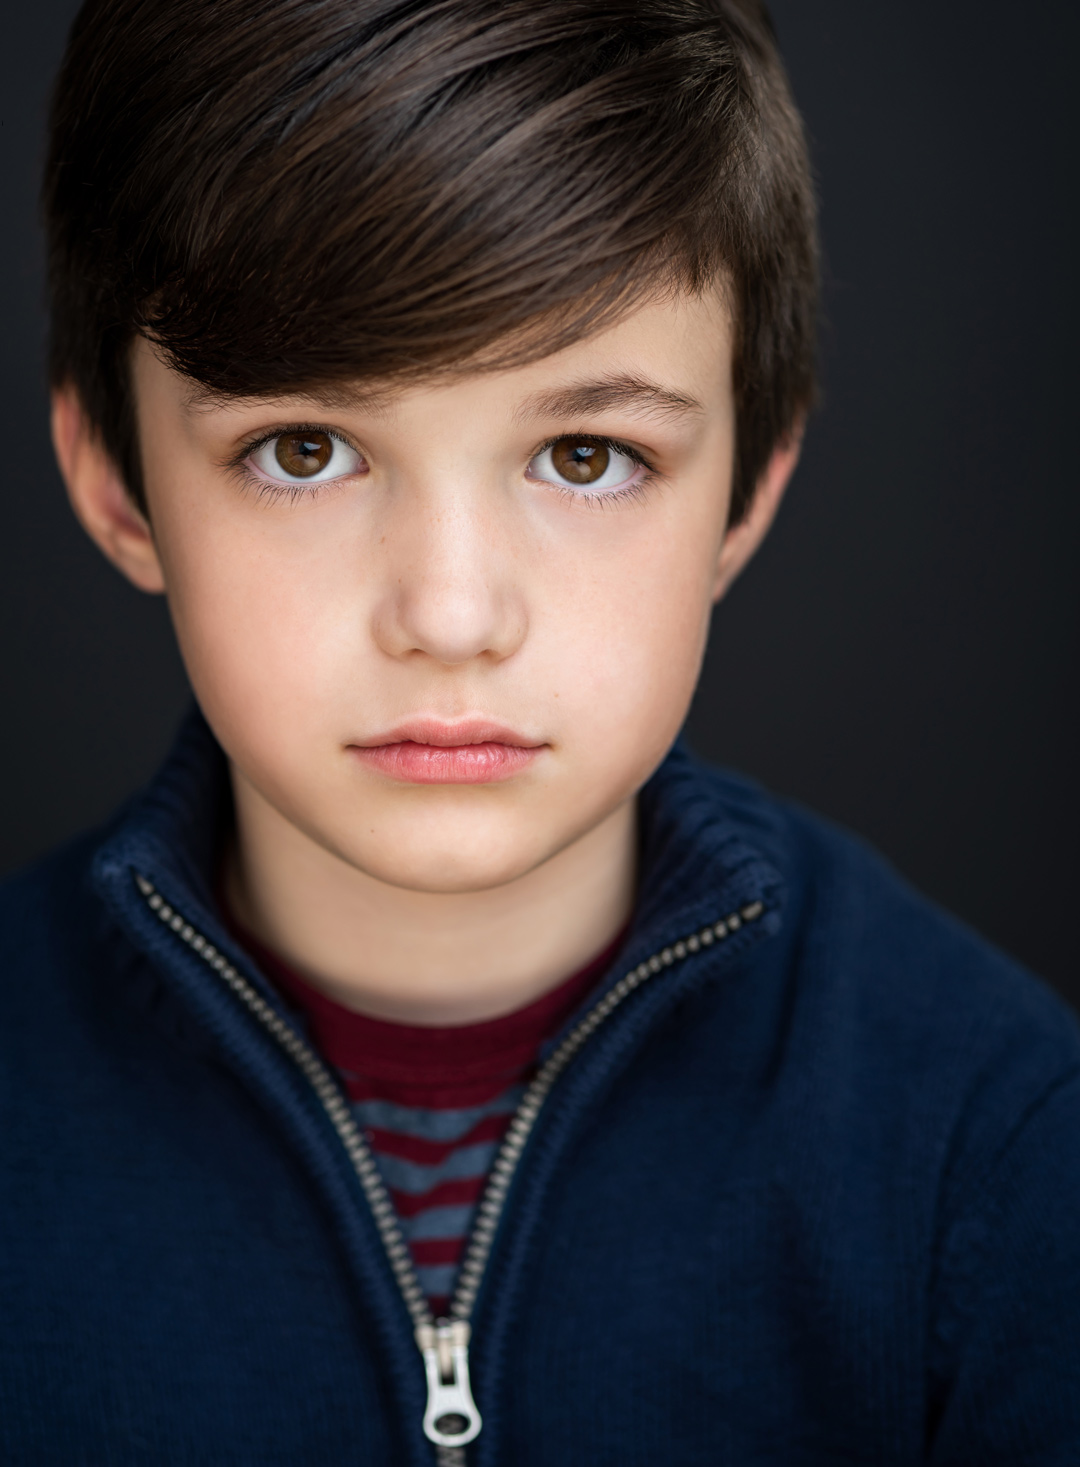 Dramatic headshot of boy child actor Matteo Bolognese